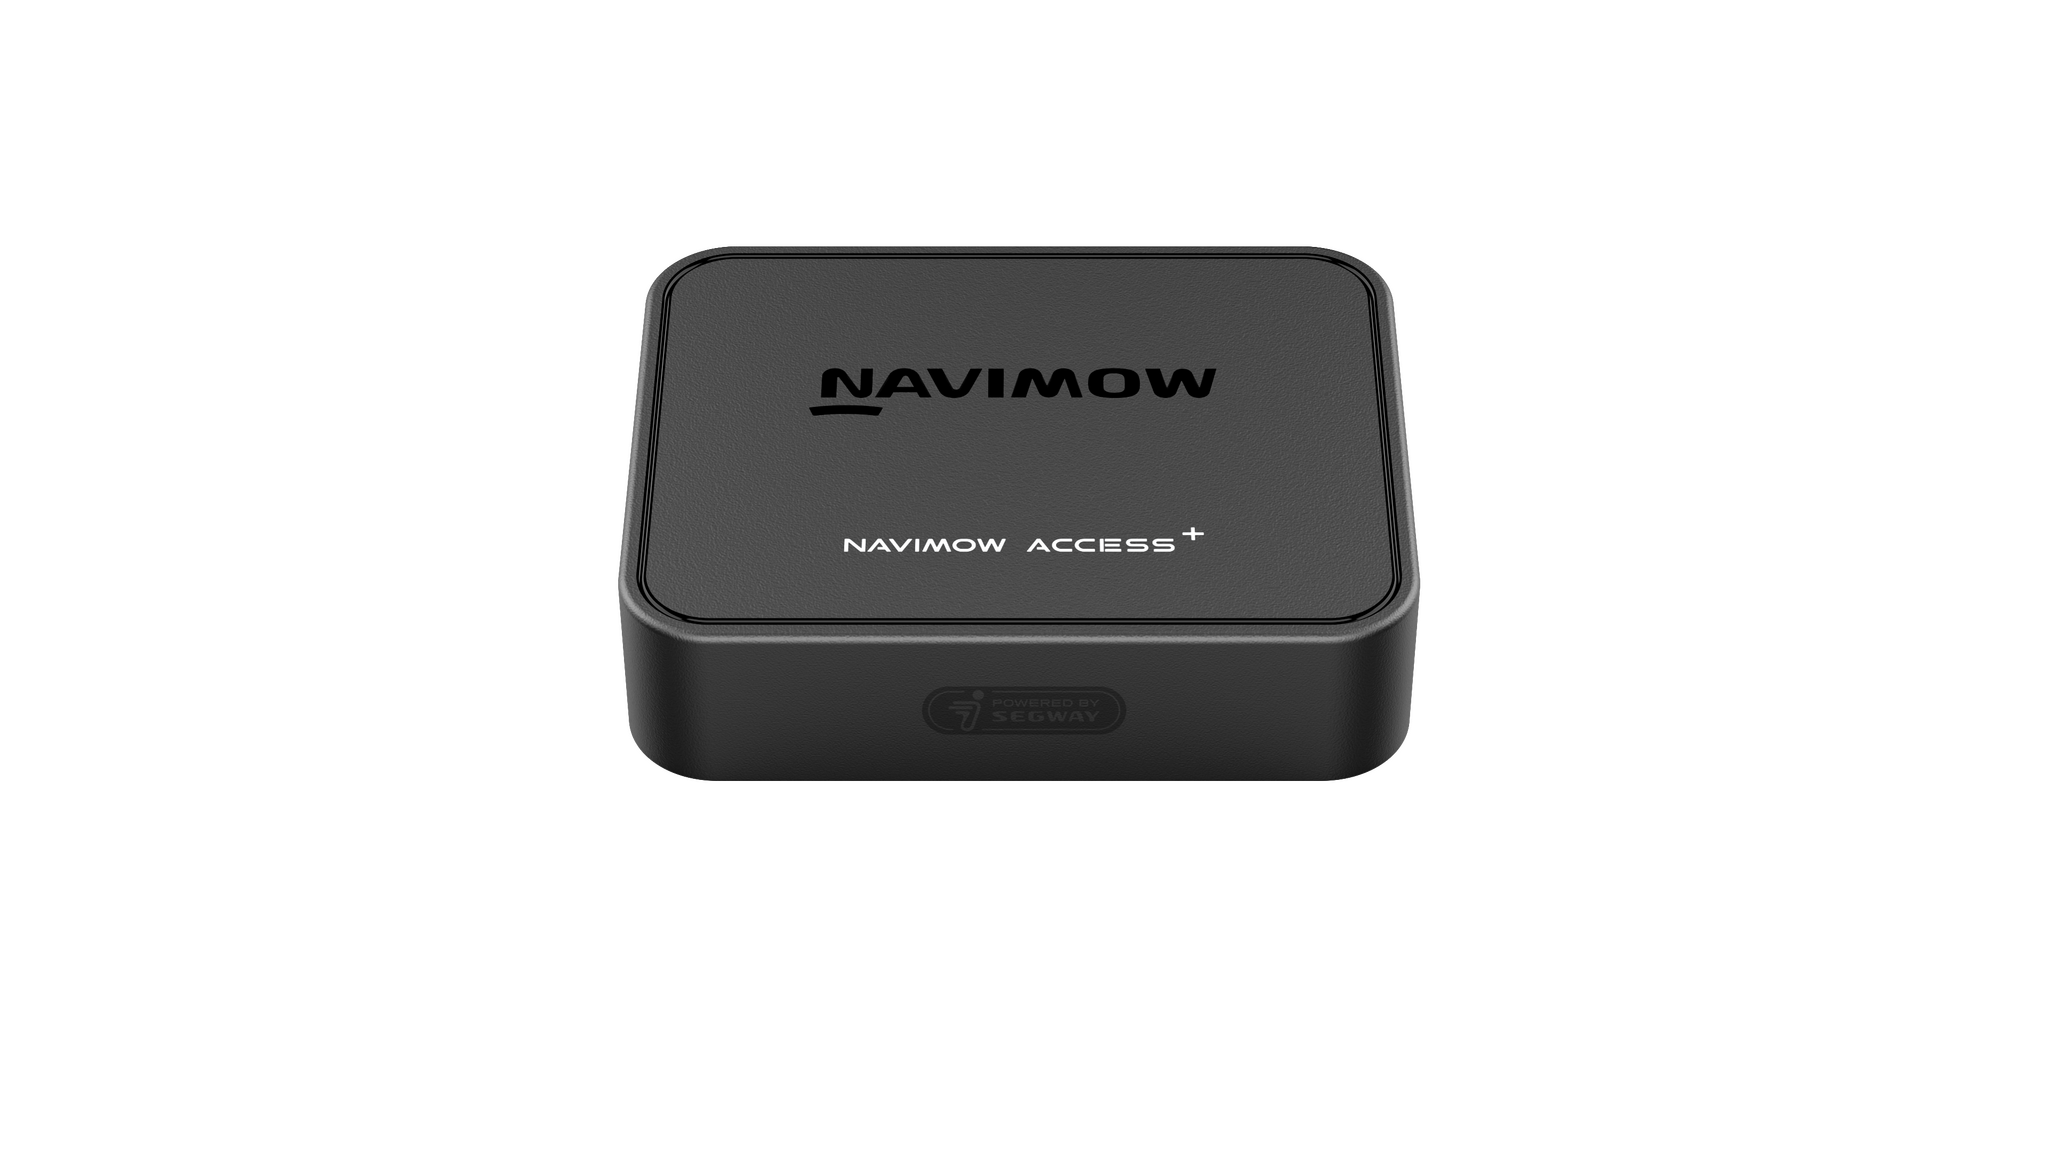 Segway Navimow 4G module for I-Series